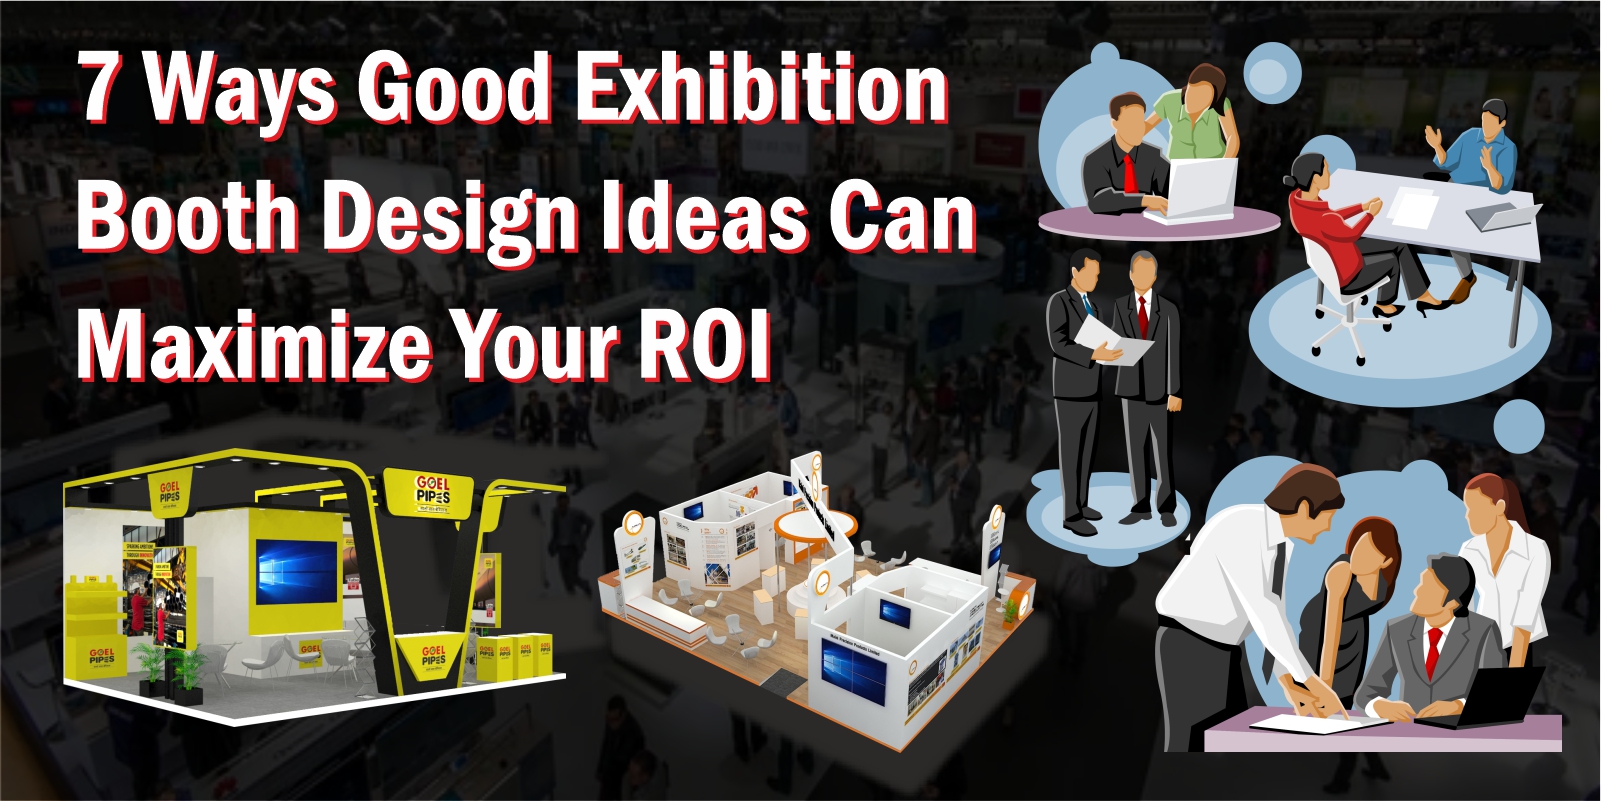 7 Ways for Exhibition Booth Design Ideas to Maximize ROI